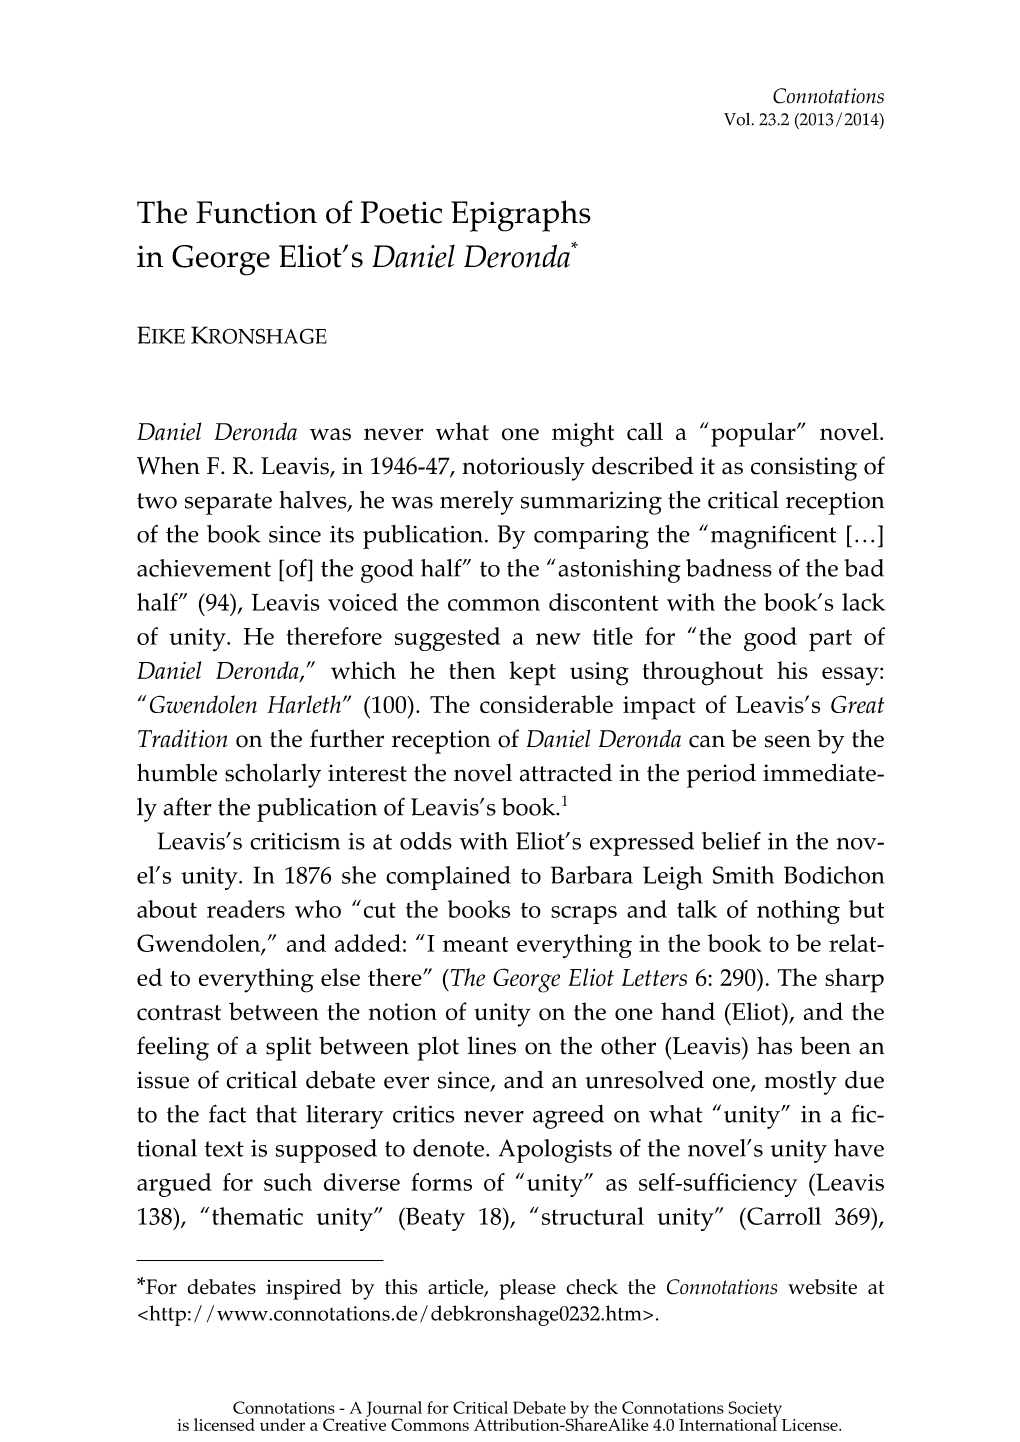 The Function of Poetic Epigraphs in George Eliot's Daniel Deronda